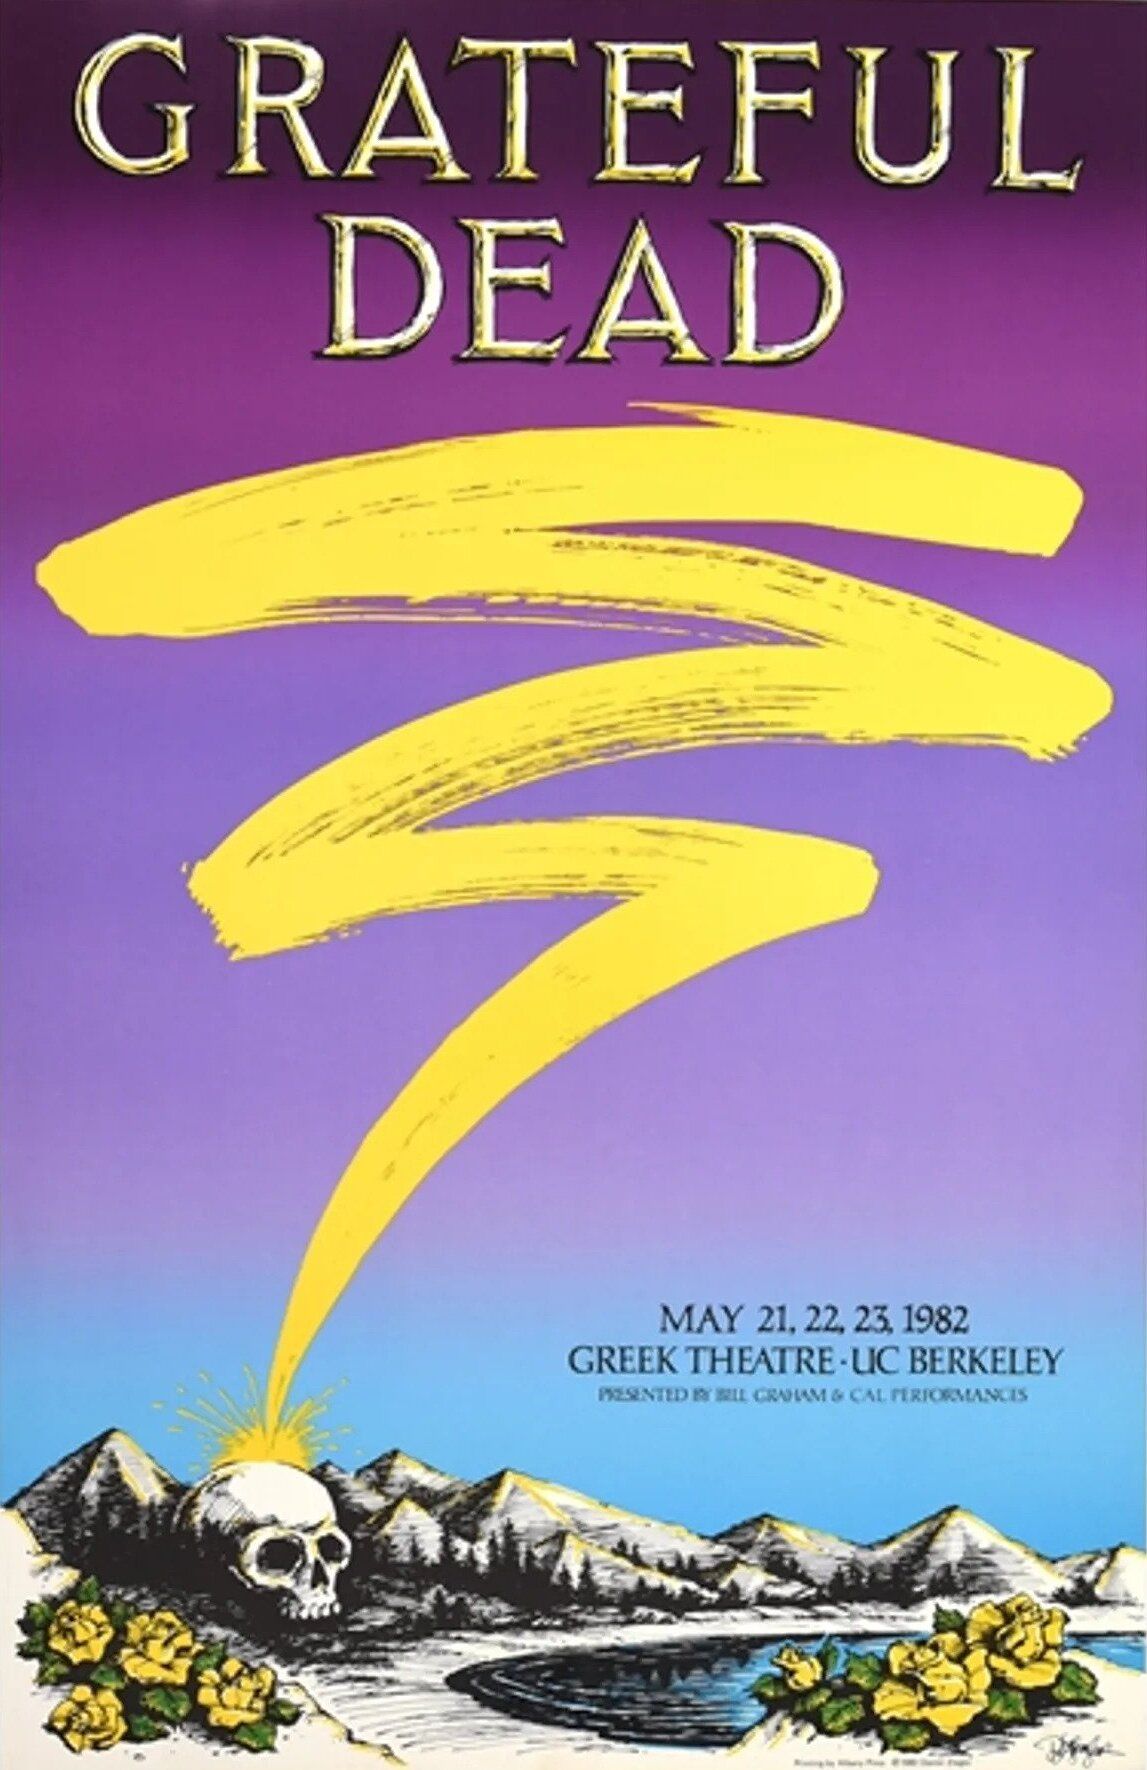 Grateful Dead Greek Theatre 1982 Concert Poster